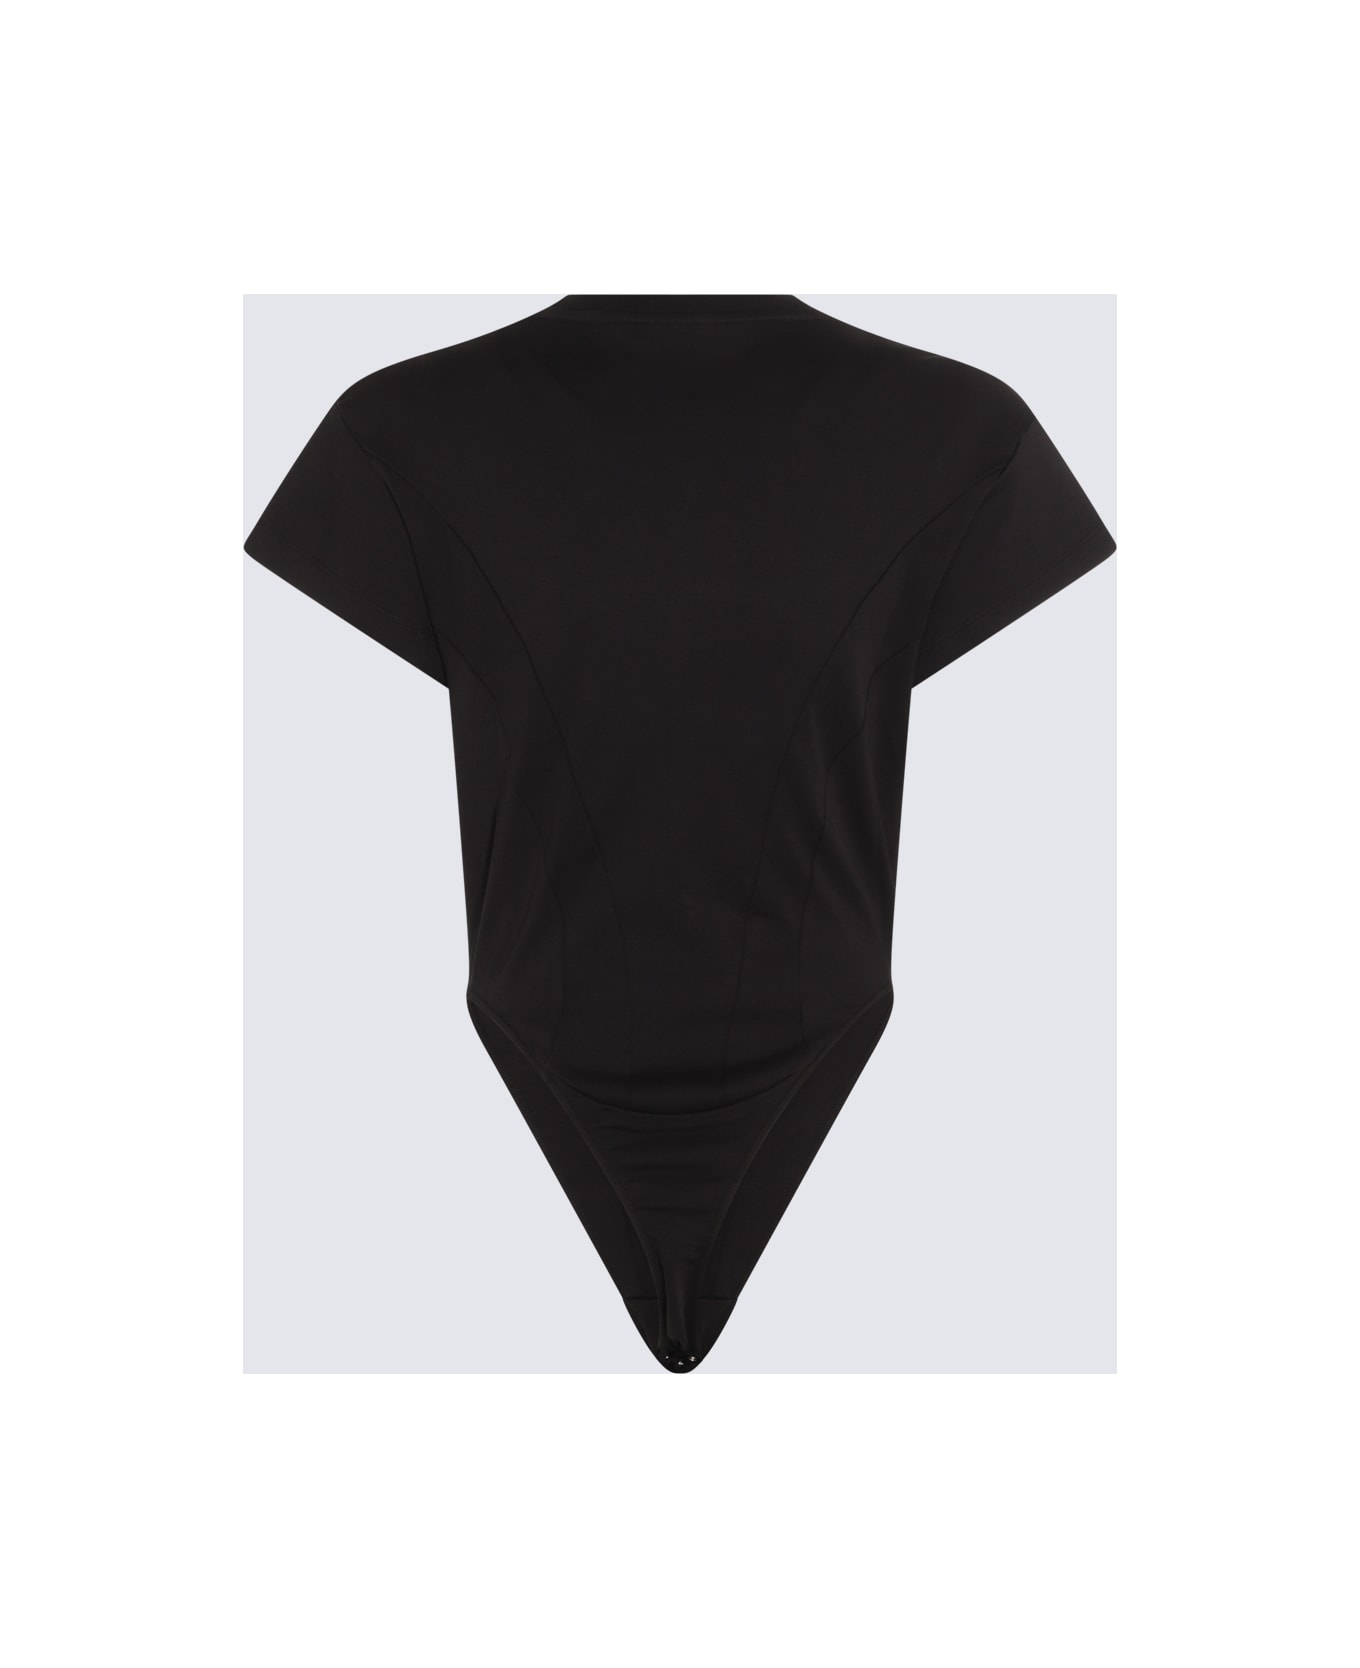 Mugler Black Jersey Zipped Bodysuit - Black ボディスーツ